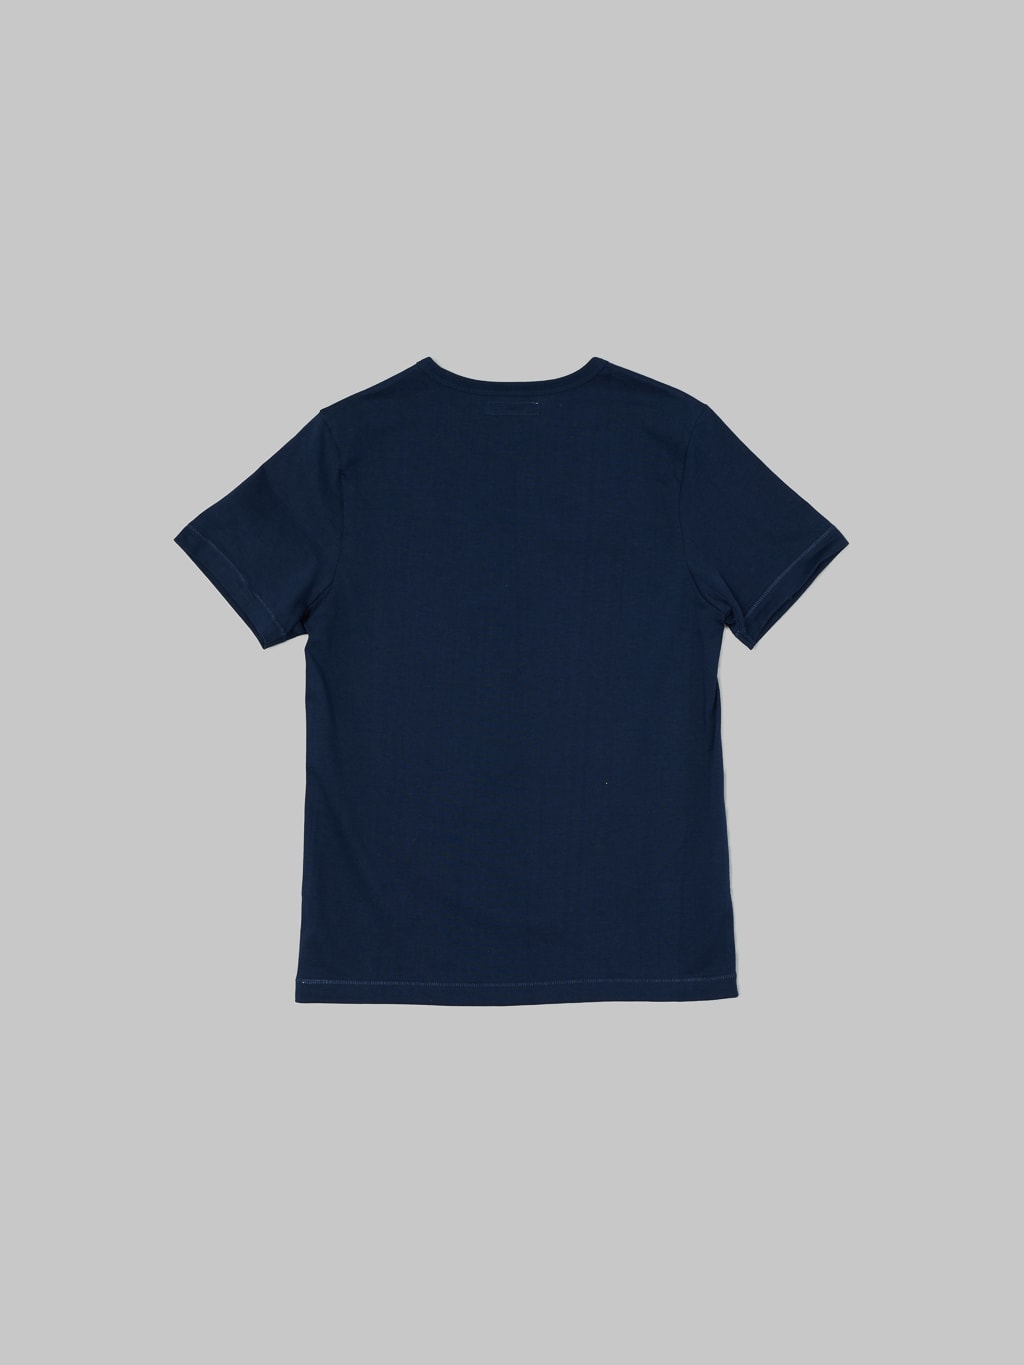 merz b schwanen good originals loopwheeled Tshirt classic fit blue back